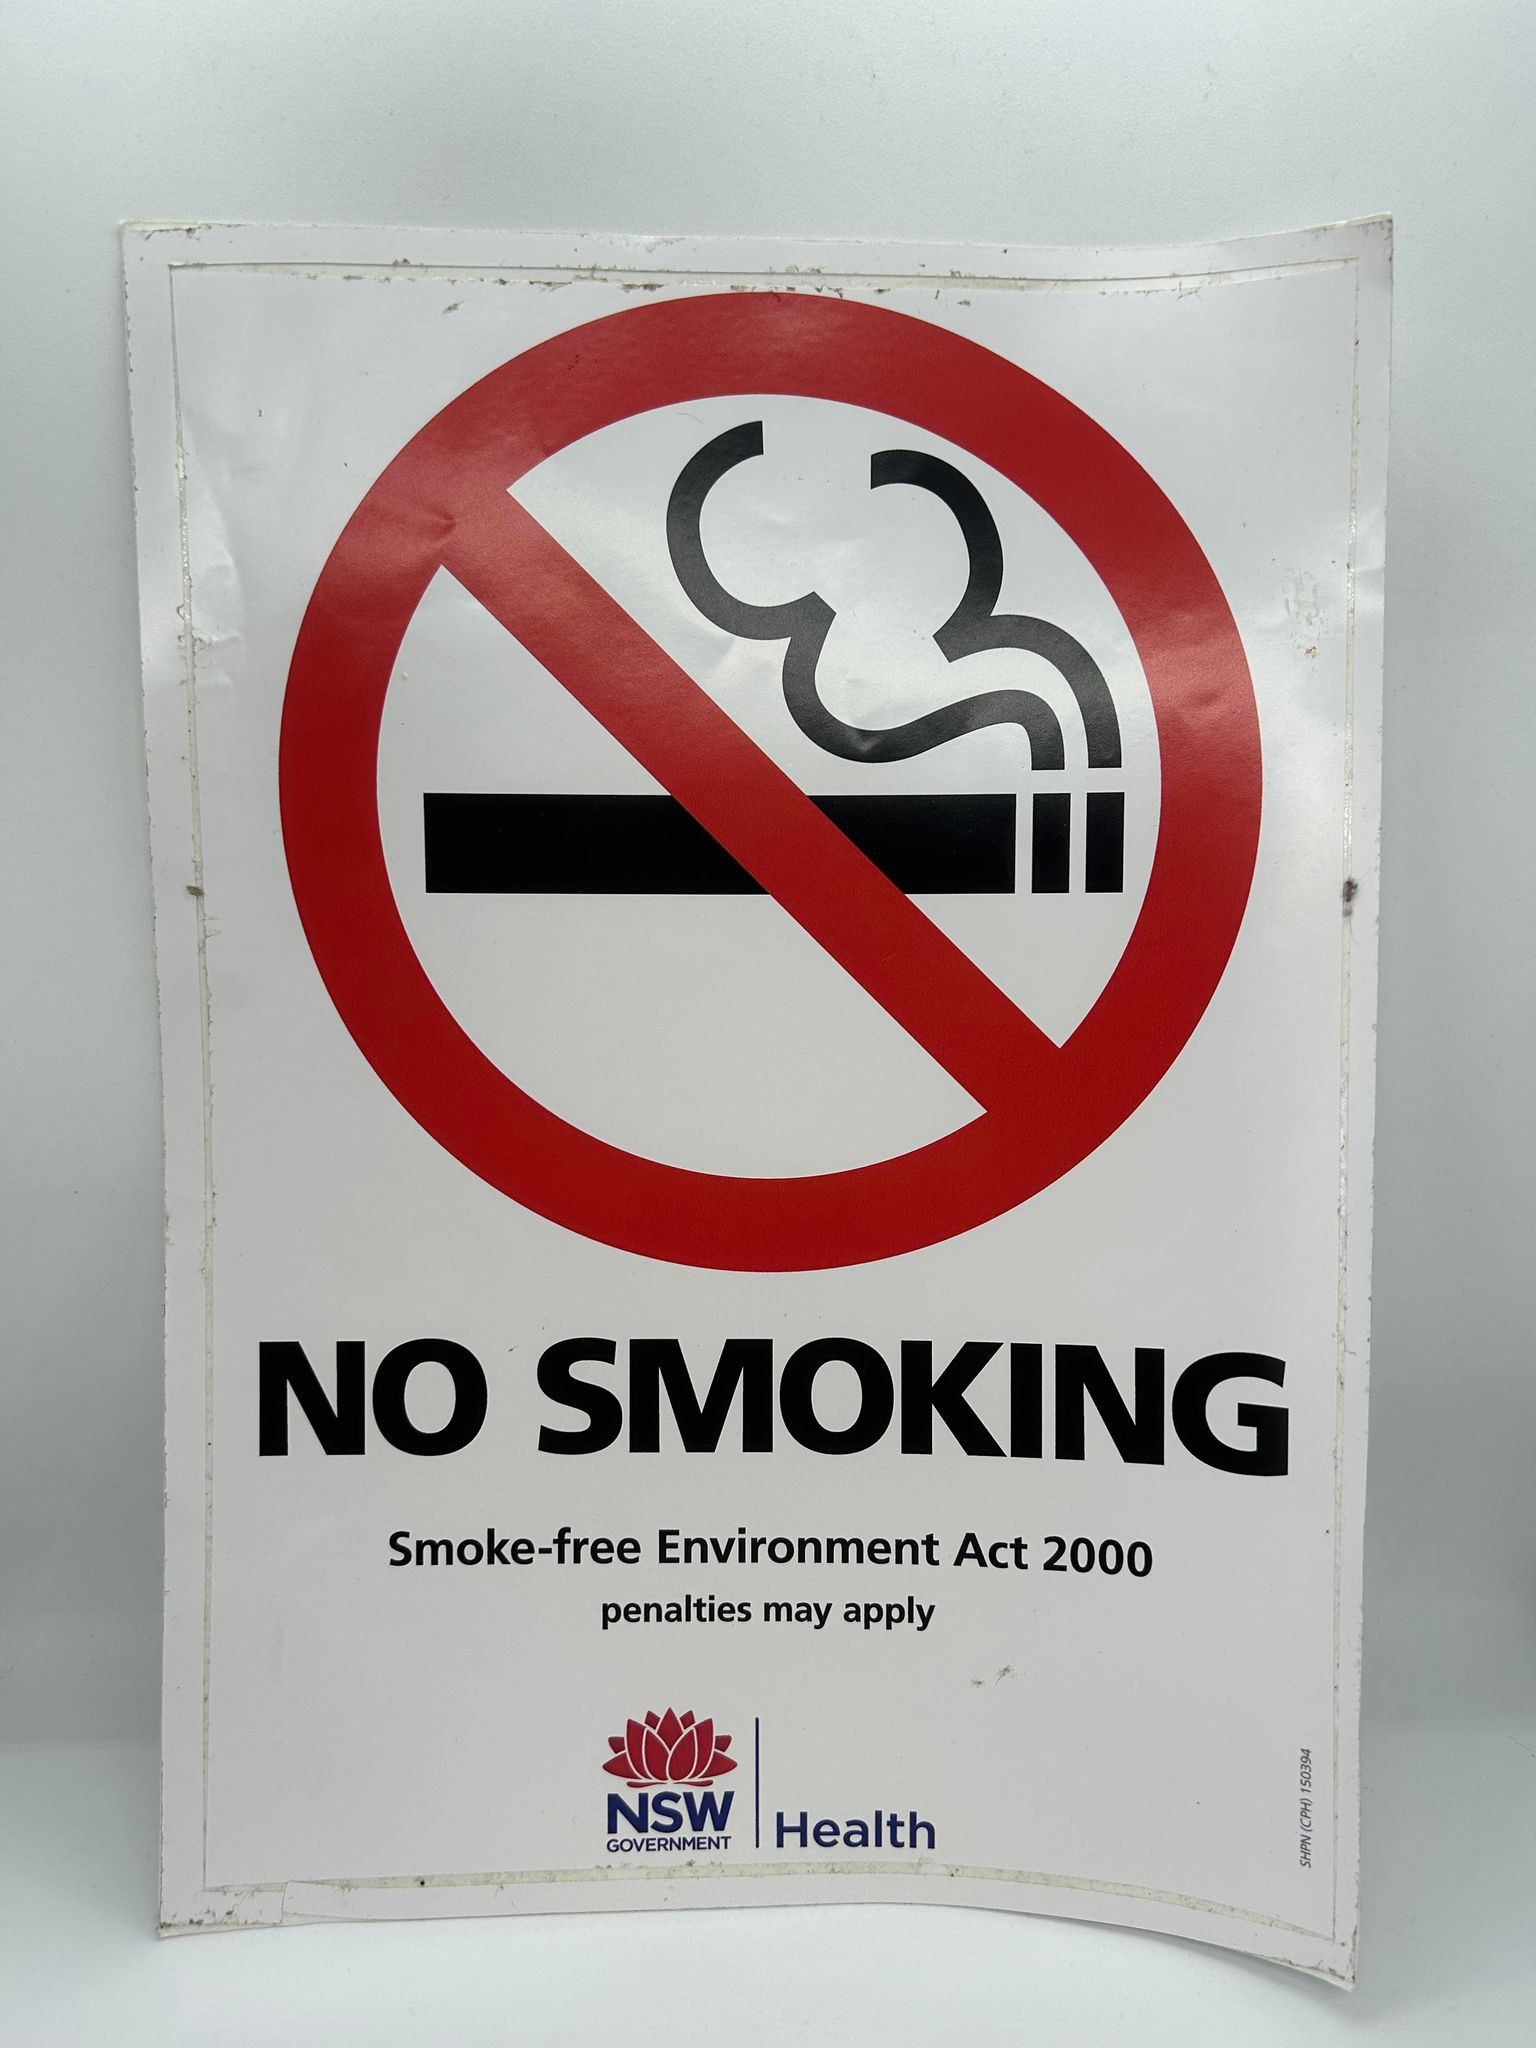 an A4 adhesive sheet with the no smoking emblem